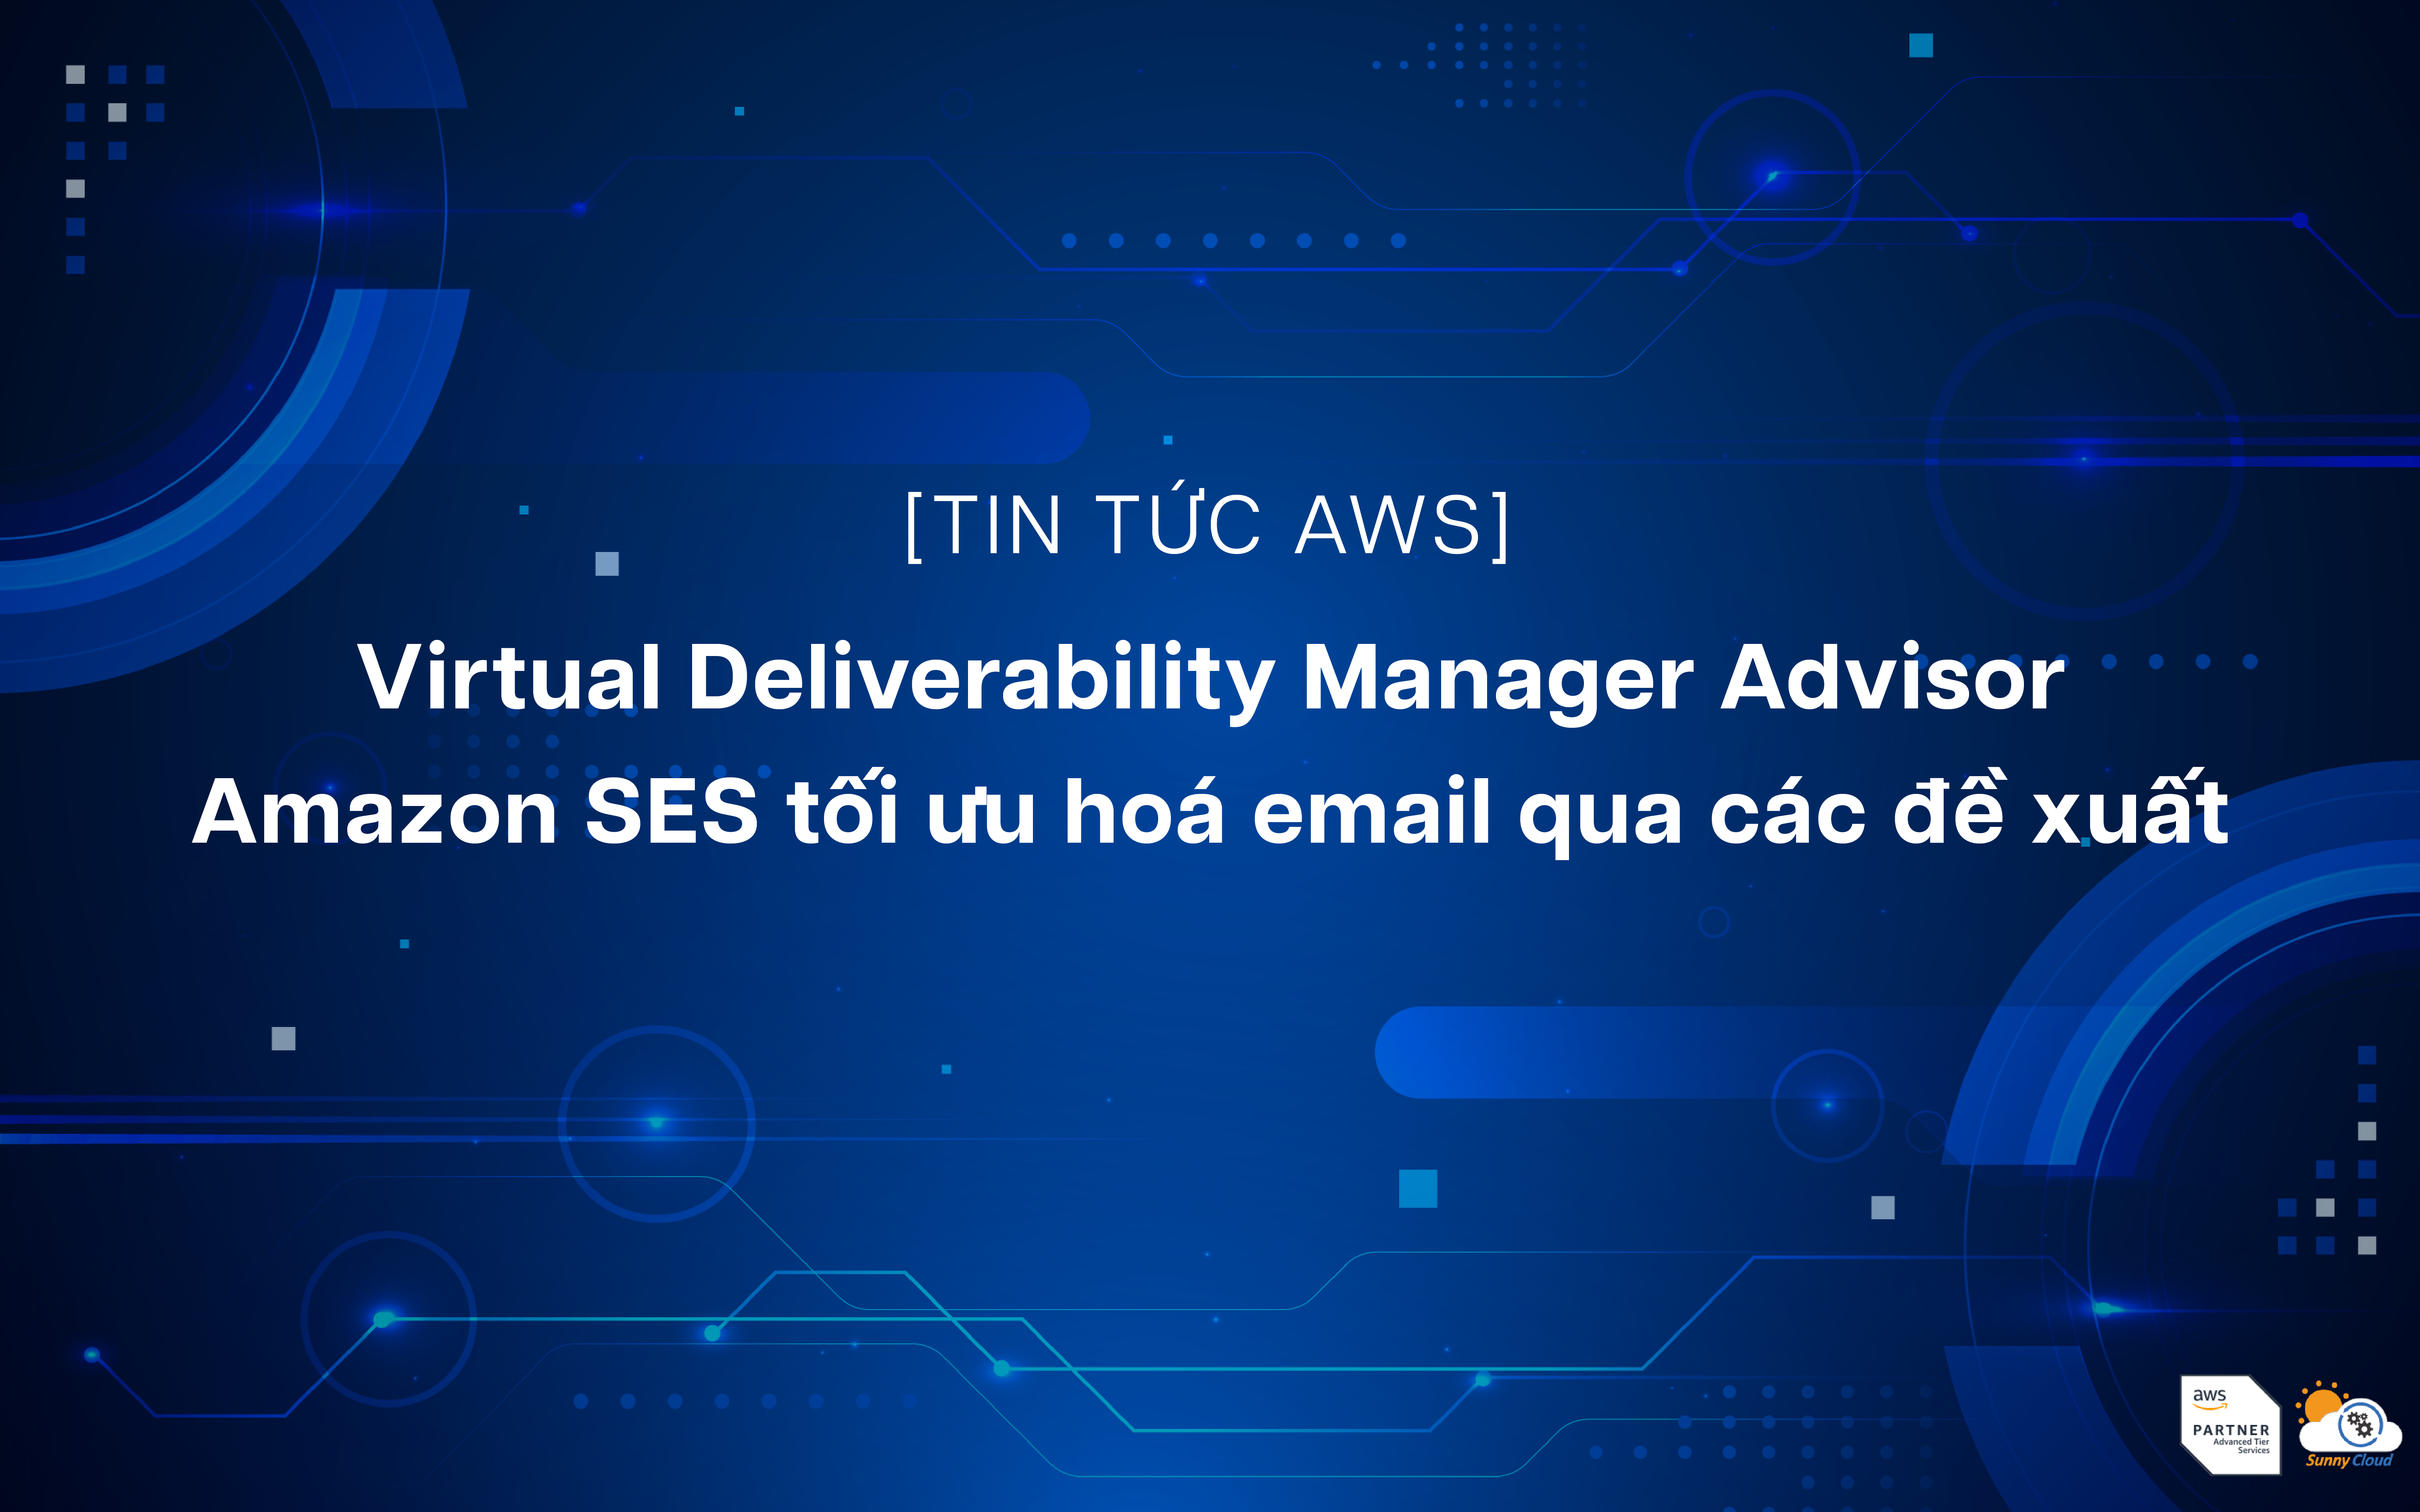 Virtual Deliverability Manager Advisor – Amazon SES tối ưu hoá email qua các đề xuất